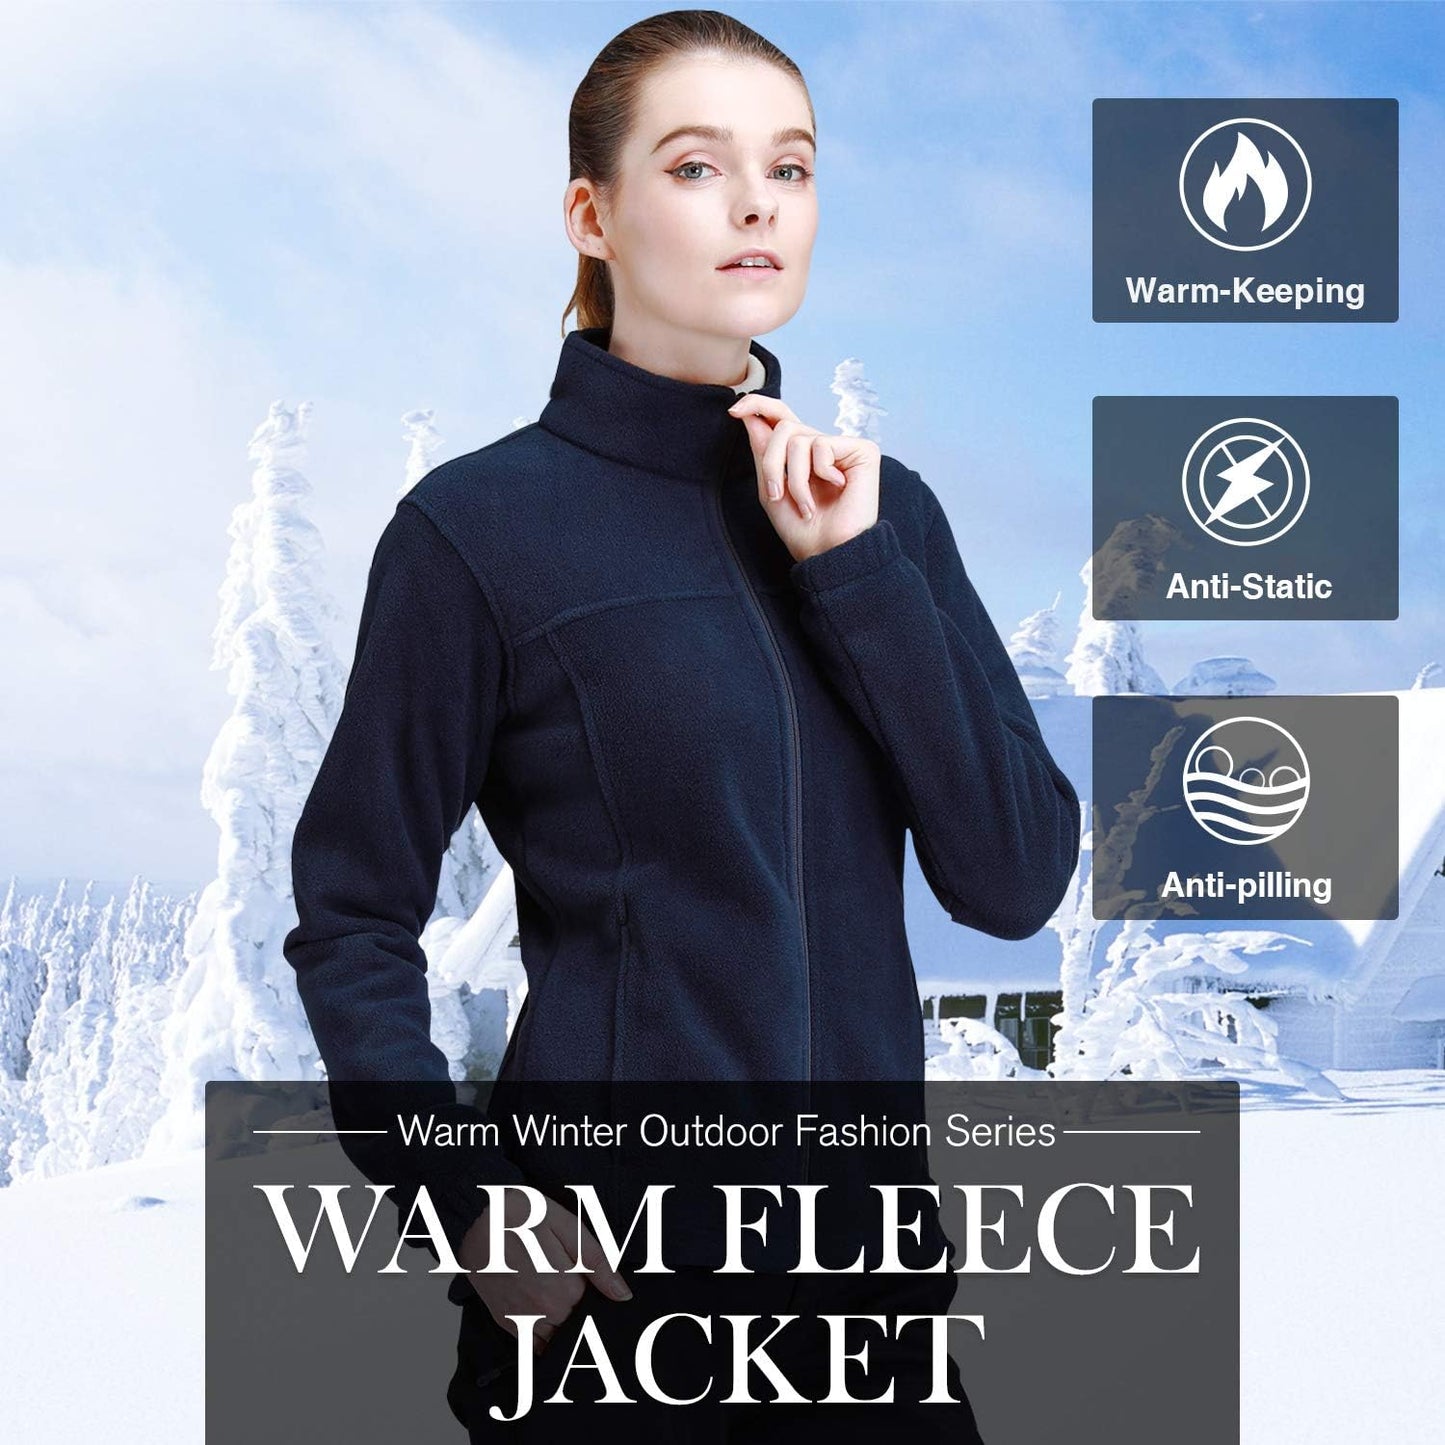 Wholesale Women's Full Zip Thermal Jackets With Pockets Soft Polar Fleece Coat - Navy